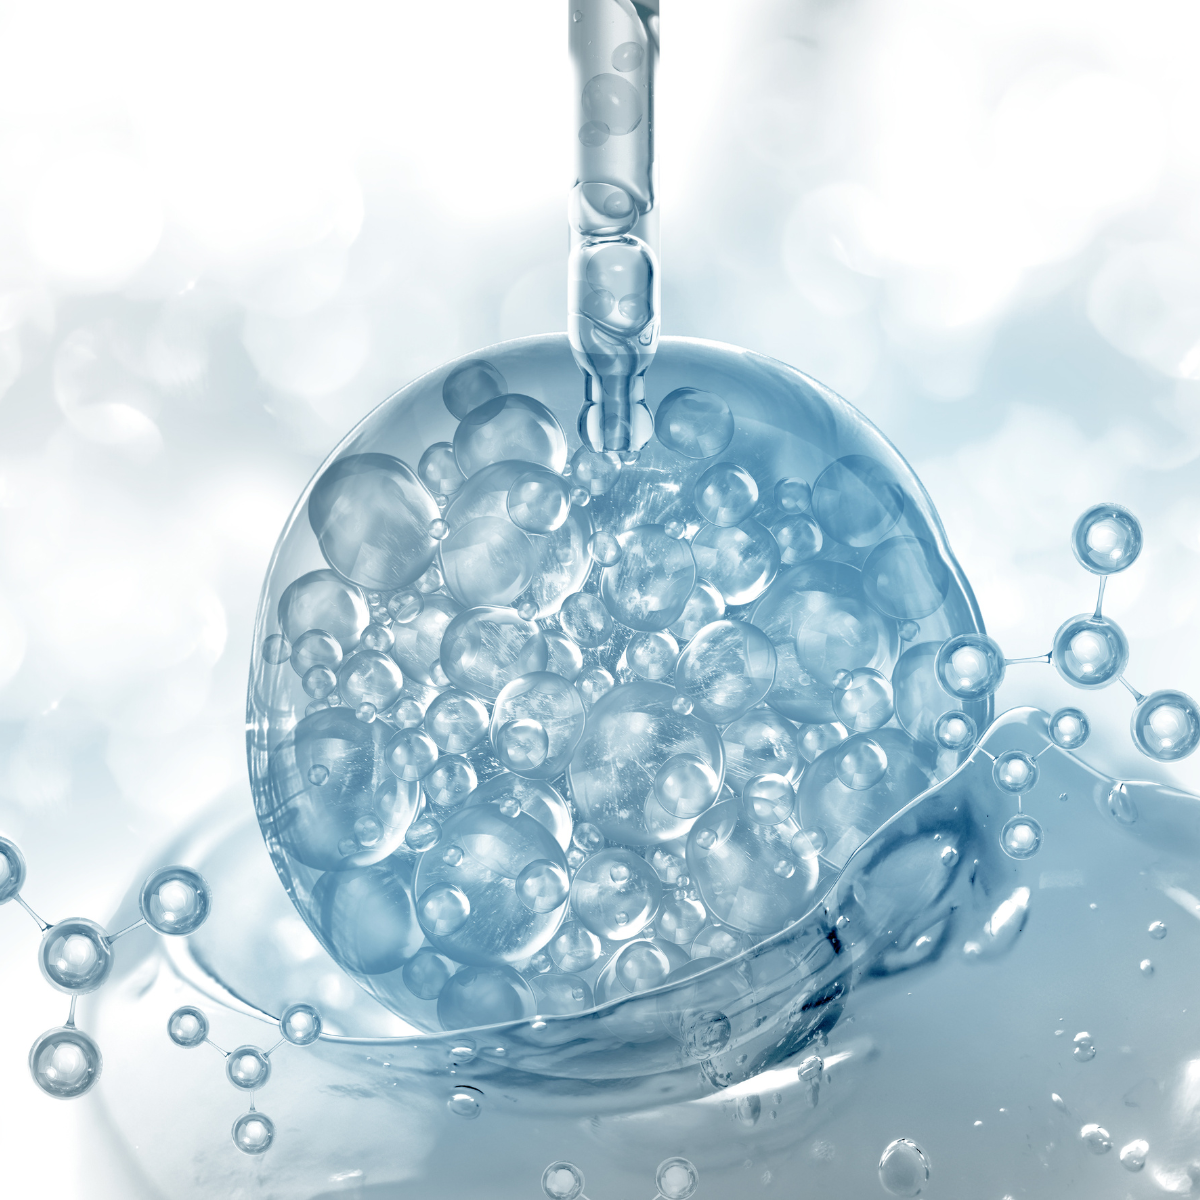 Dropper touching a molecular bubble splashing in dripping serum